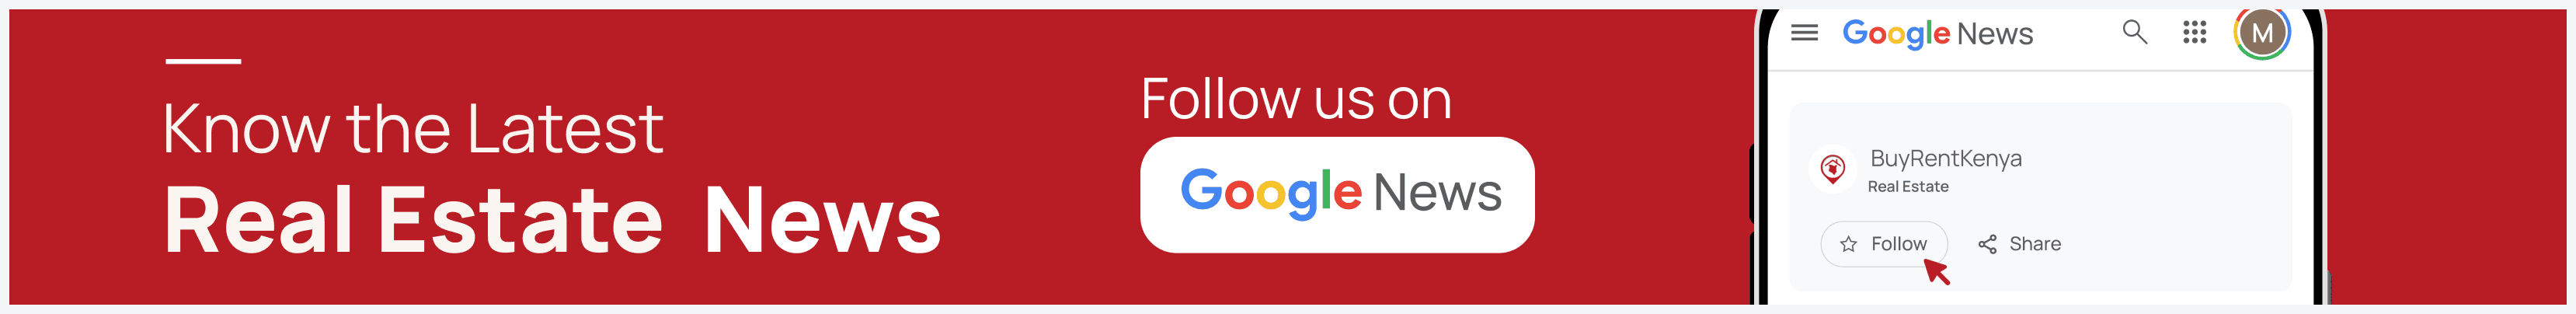 Follow BuyRentKenya on Google News